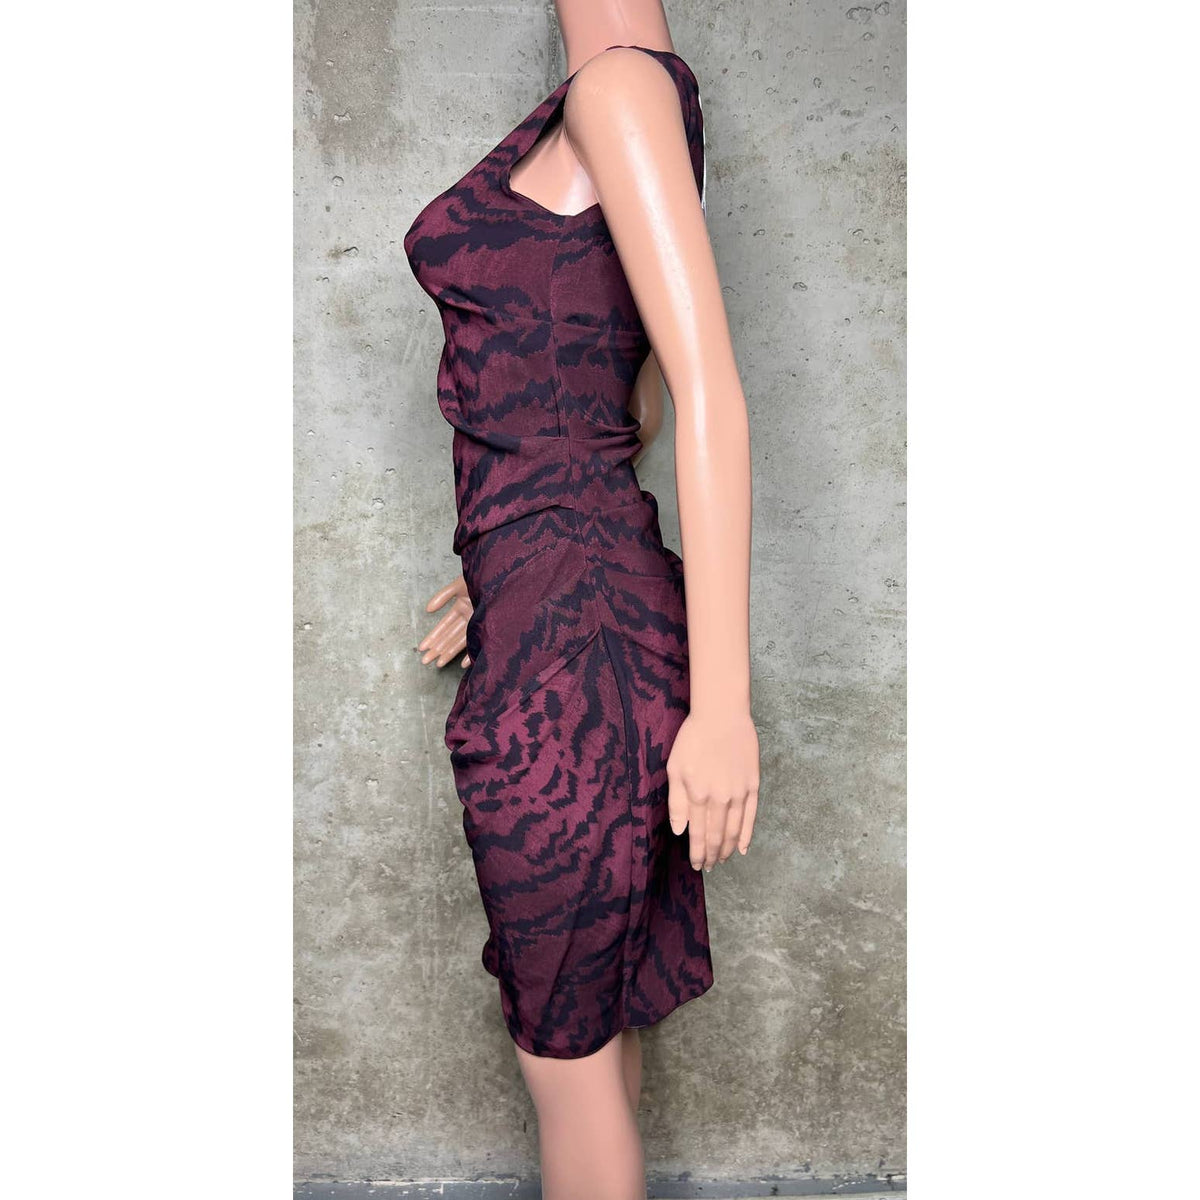 Emilio Pucci Red Animal Print Dress Sz.6(42)